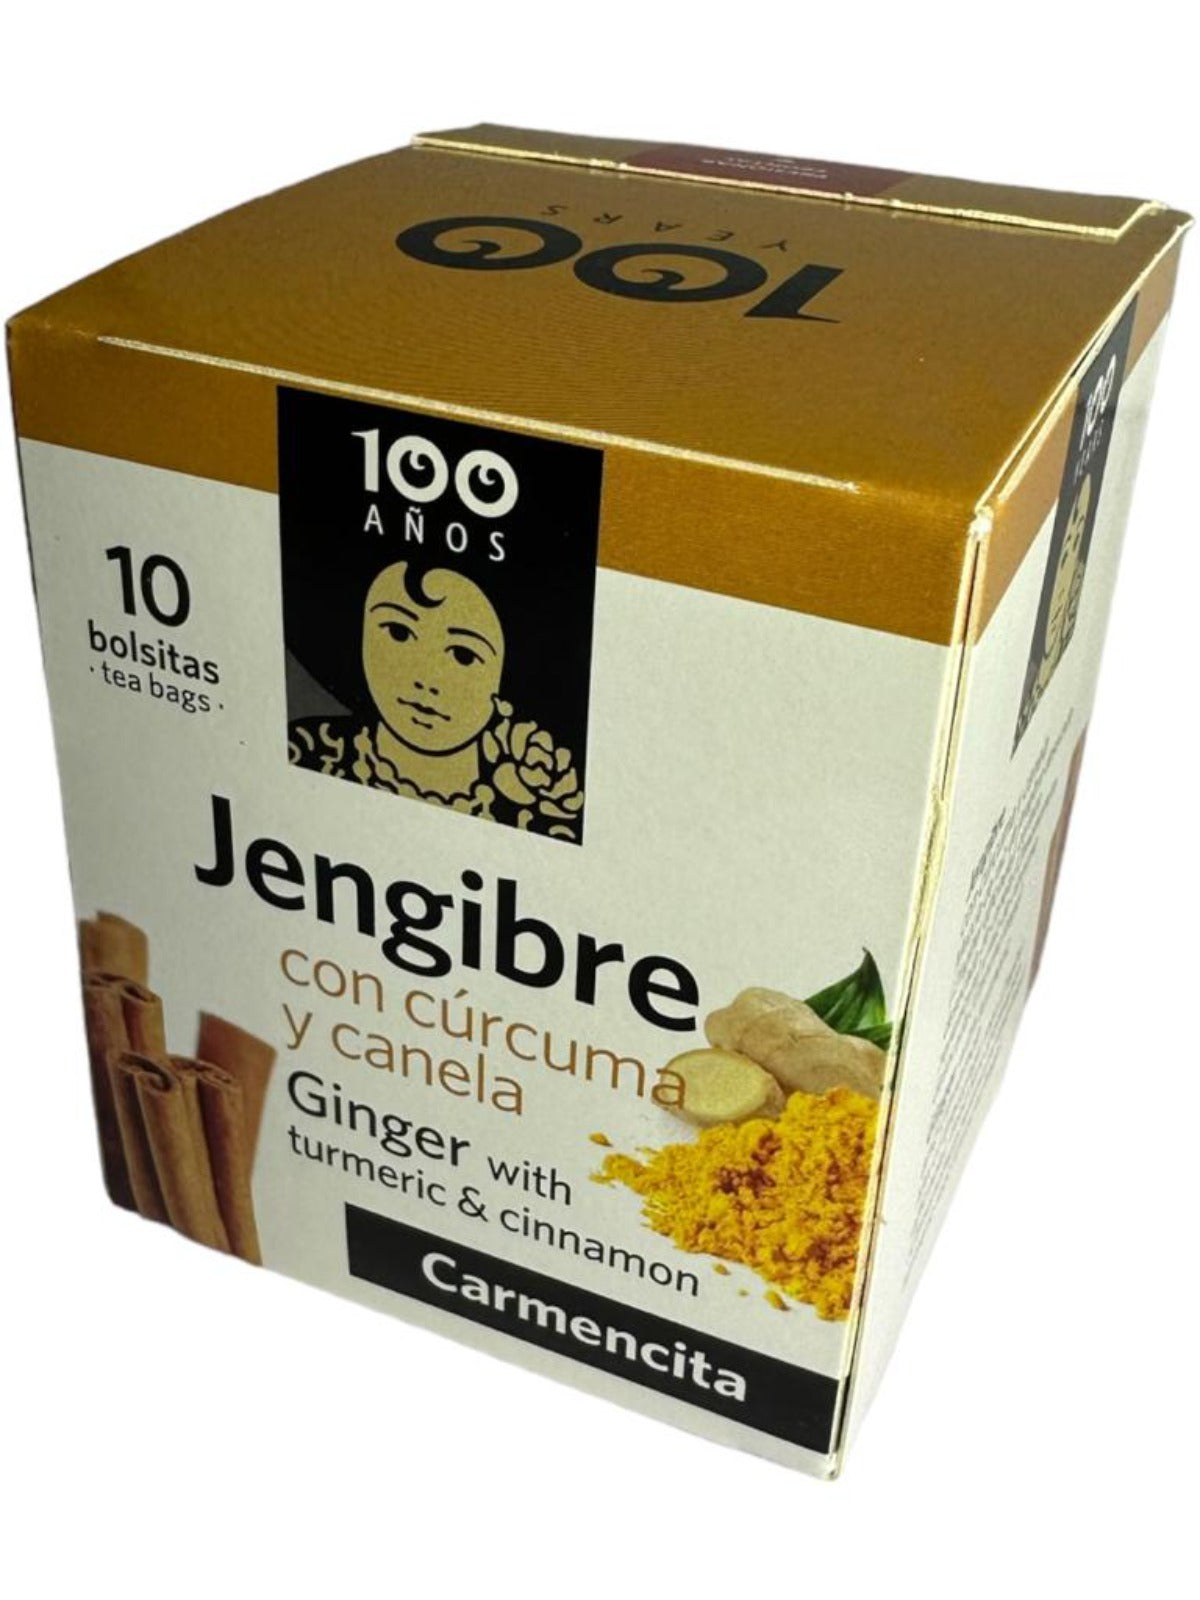 Carmencita Ginger With Turmeric And Cinnamon Tea 10x bags 15g